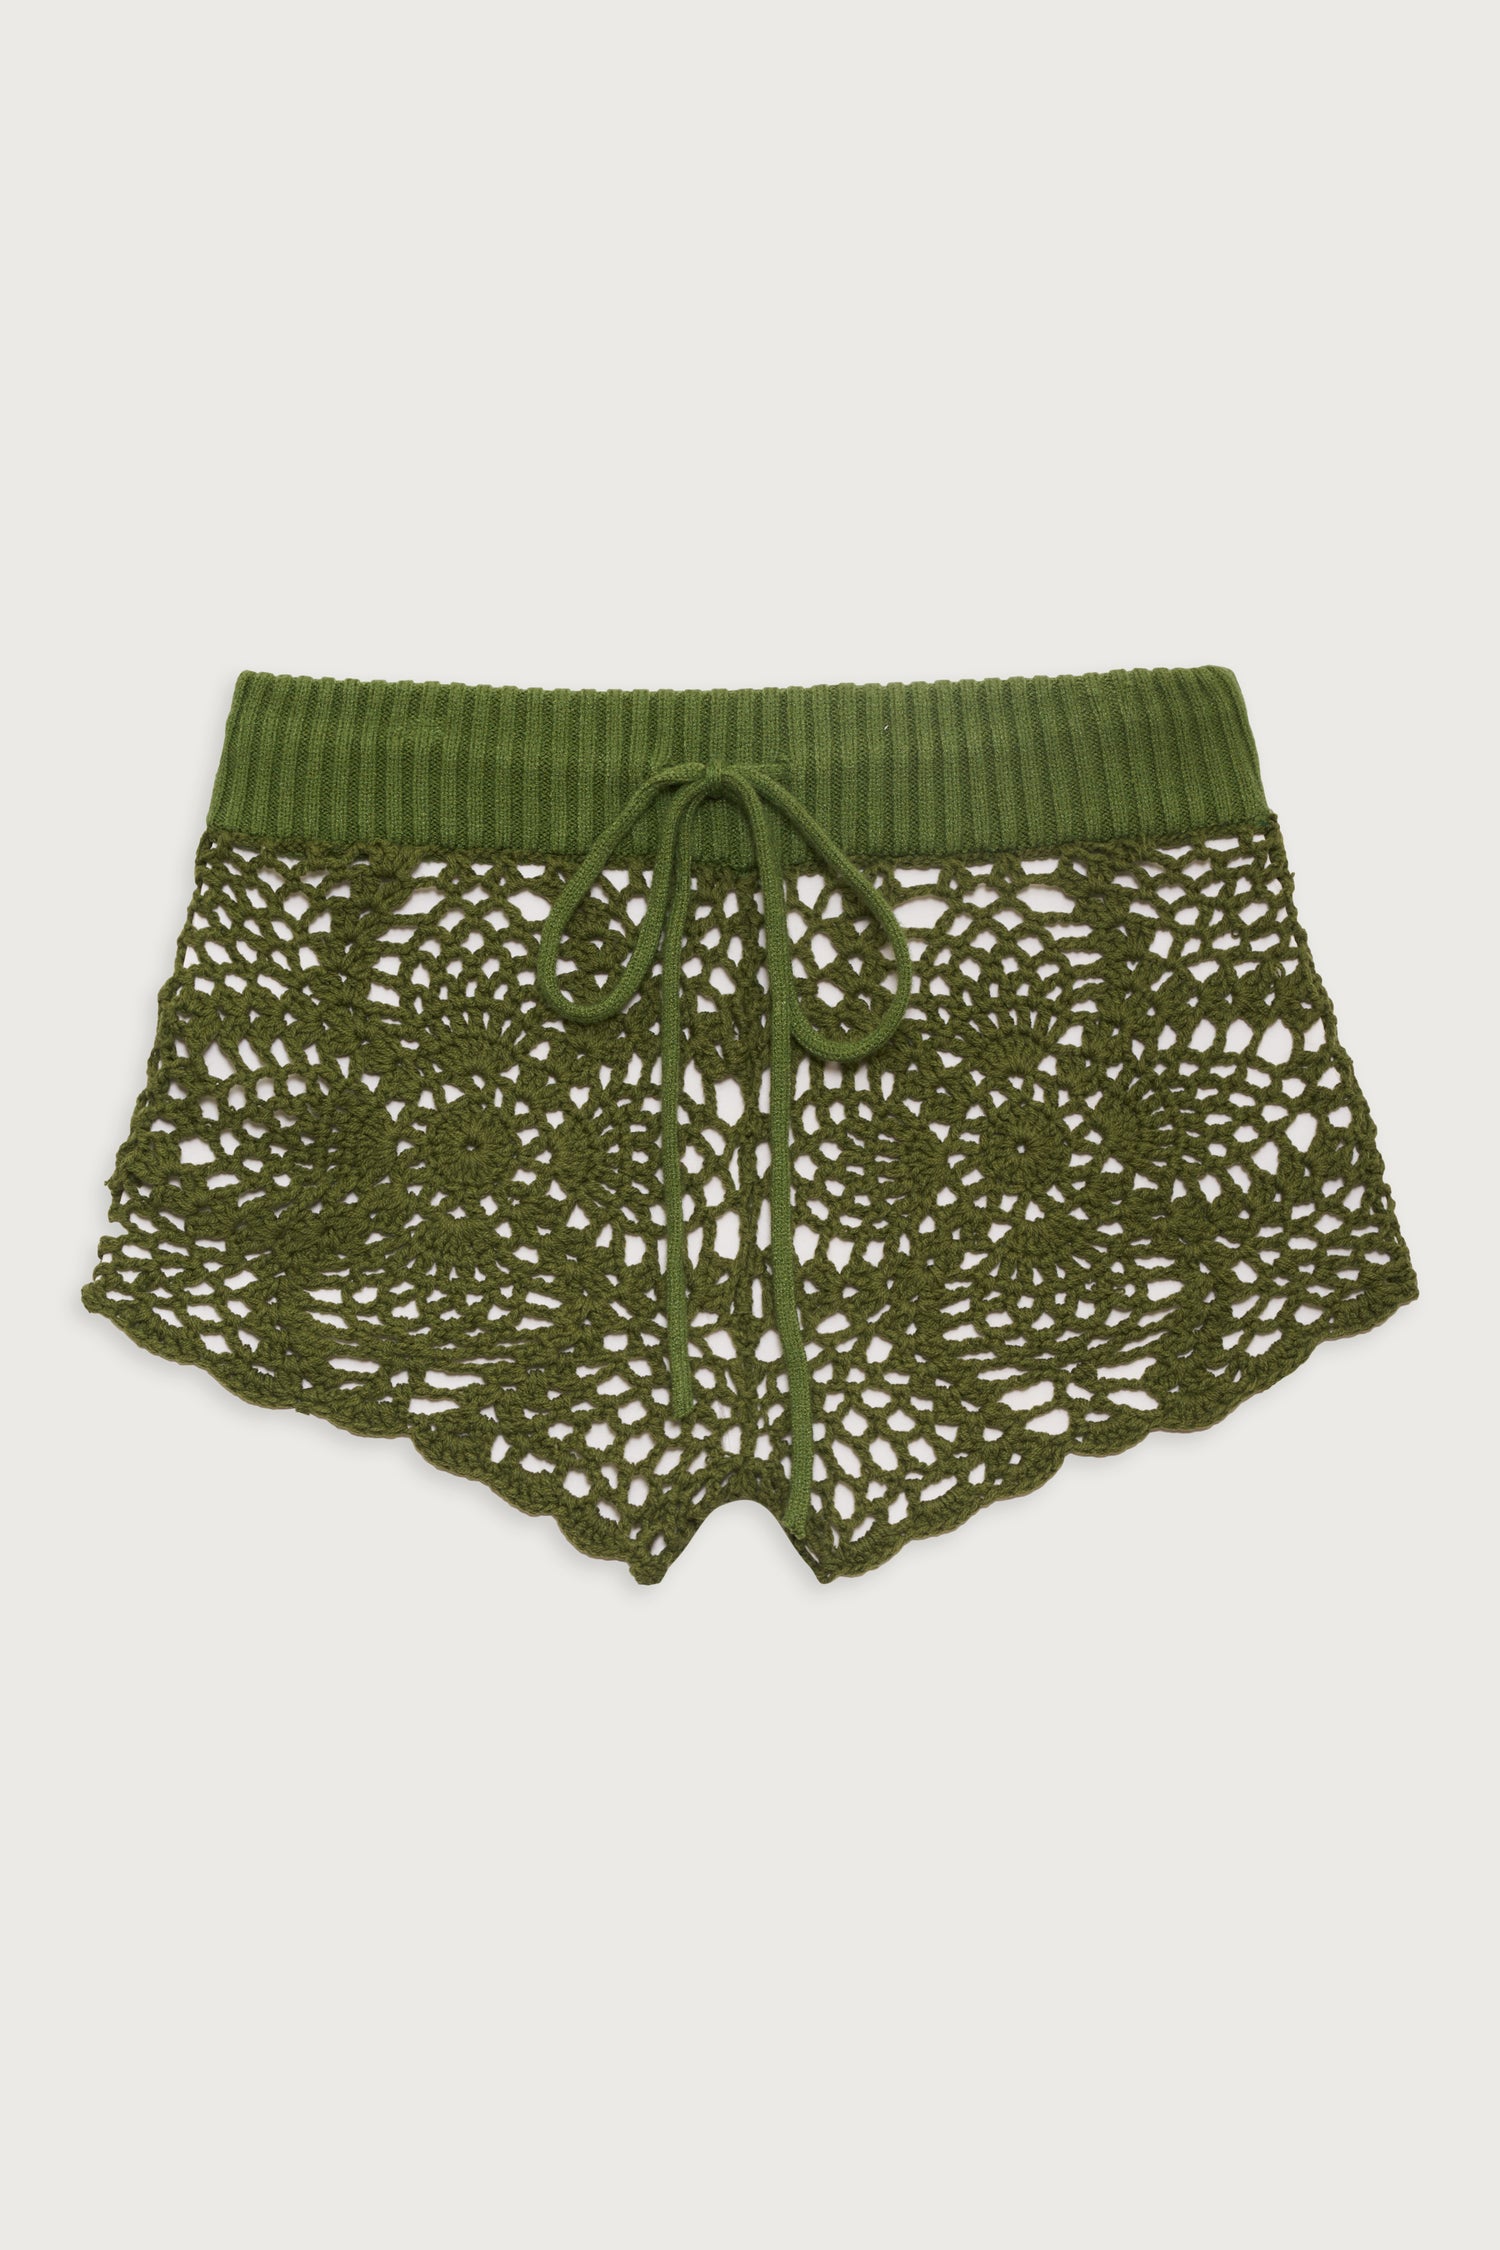 Lyla Crochet Mini Short - Sea Moss